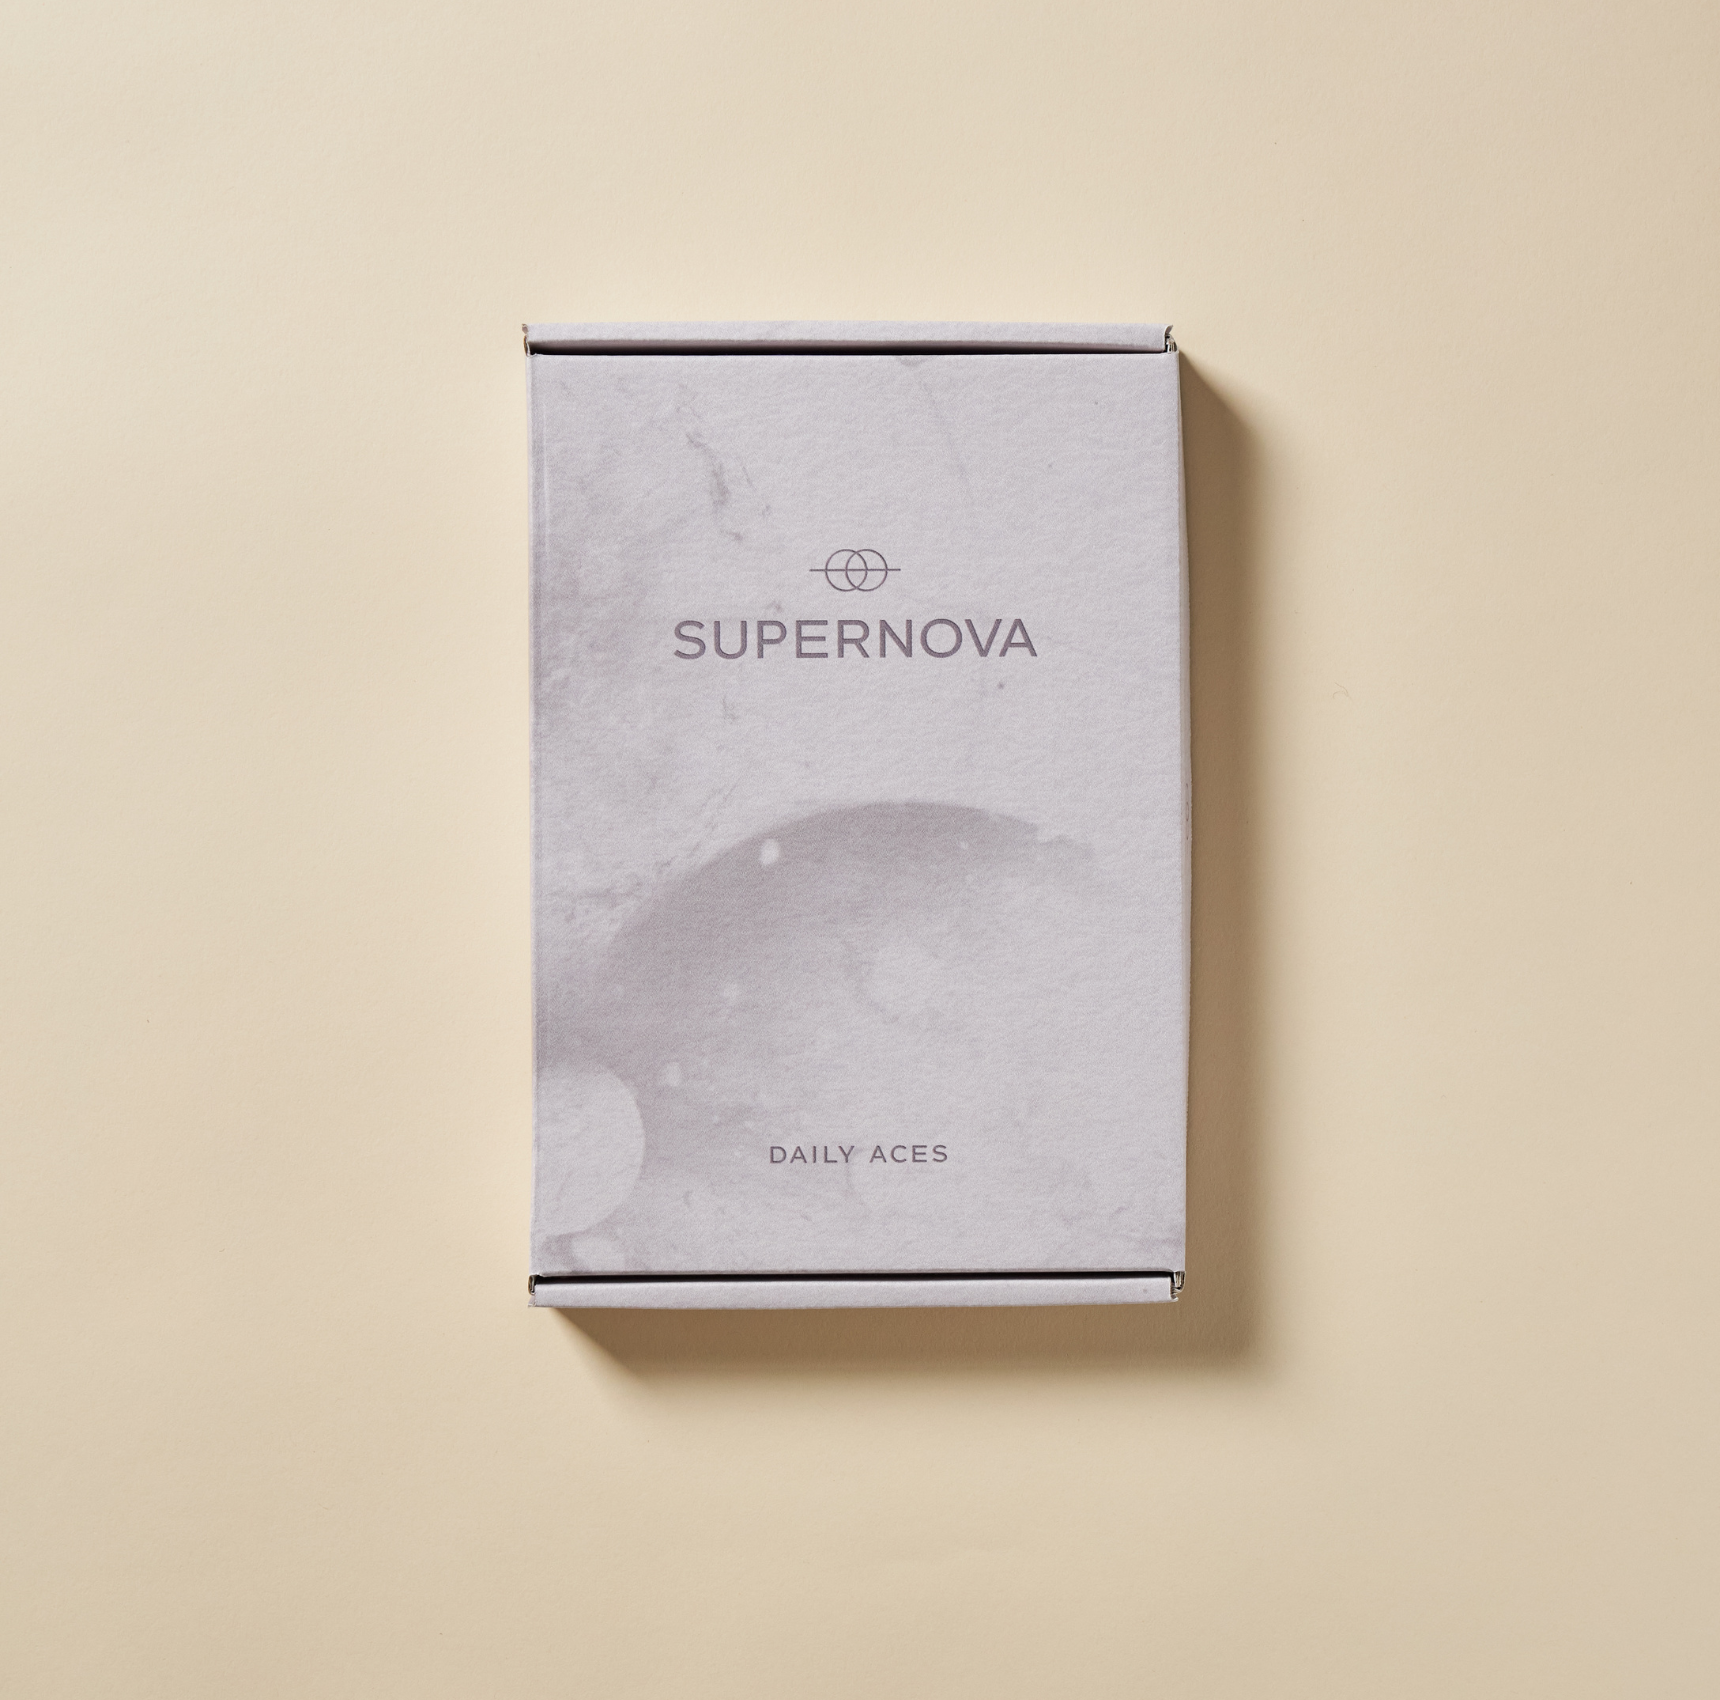 SUPERNOVA met parfum pouch & sample